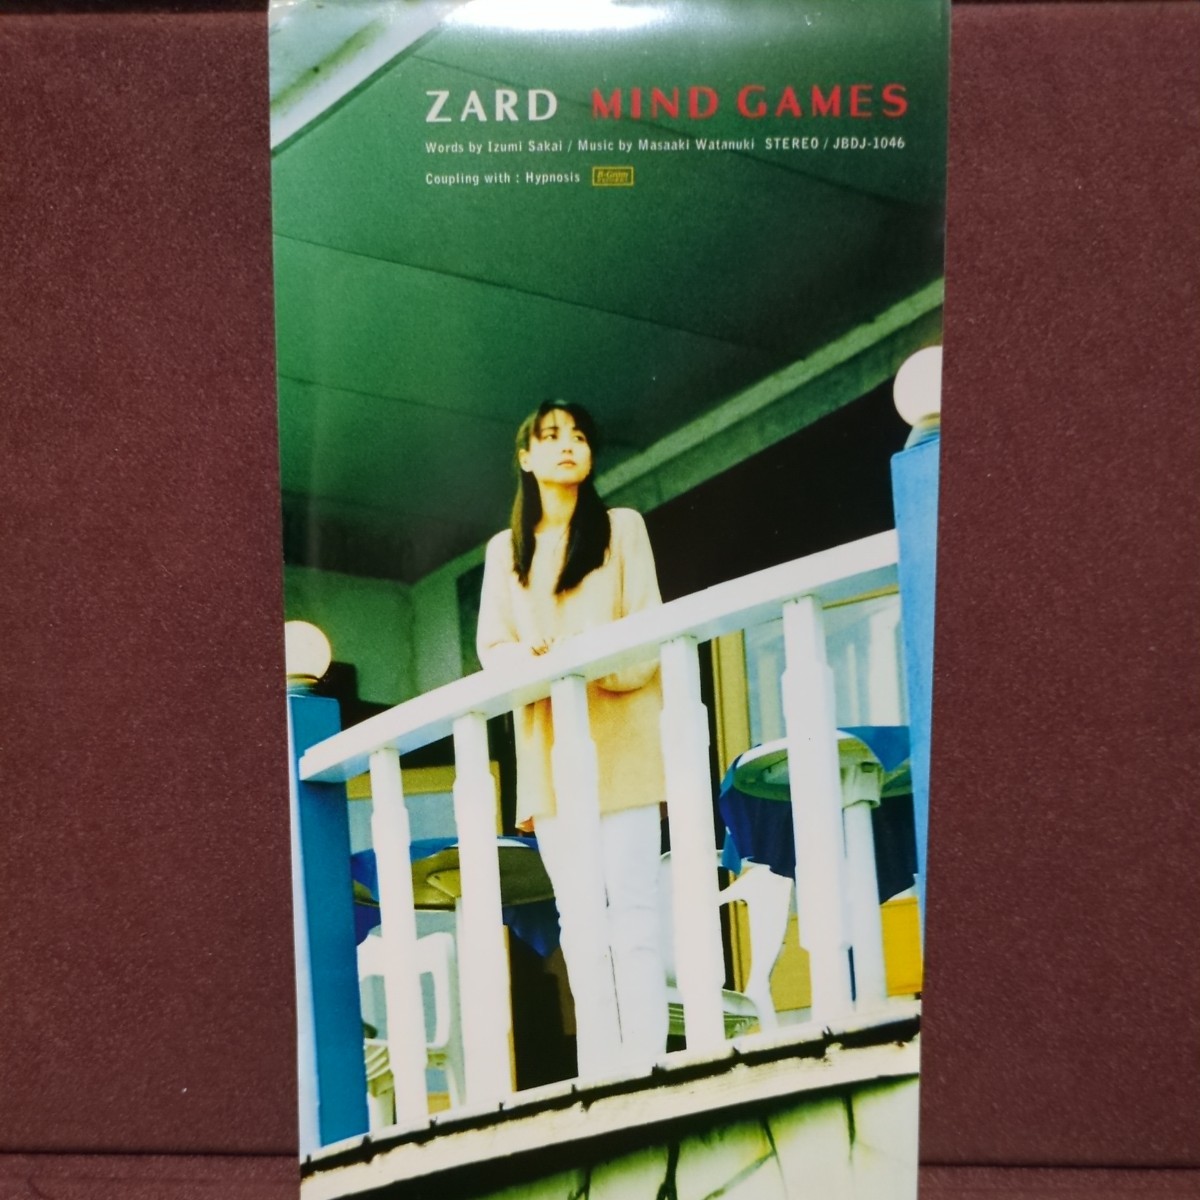 ★５★ ZARD のシングルCD「MIND GAMES」の画像1